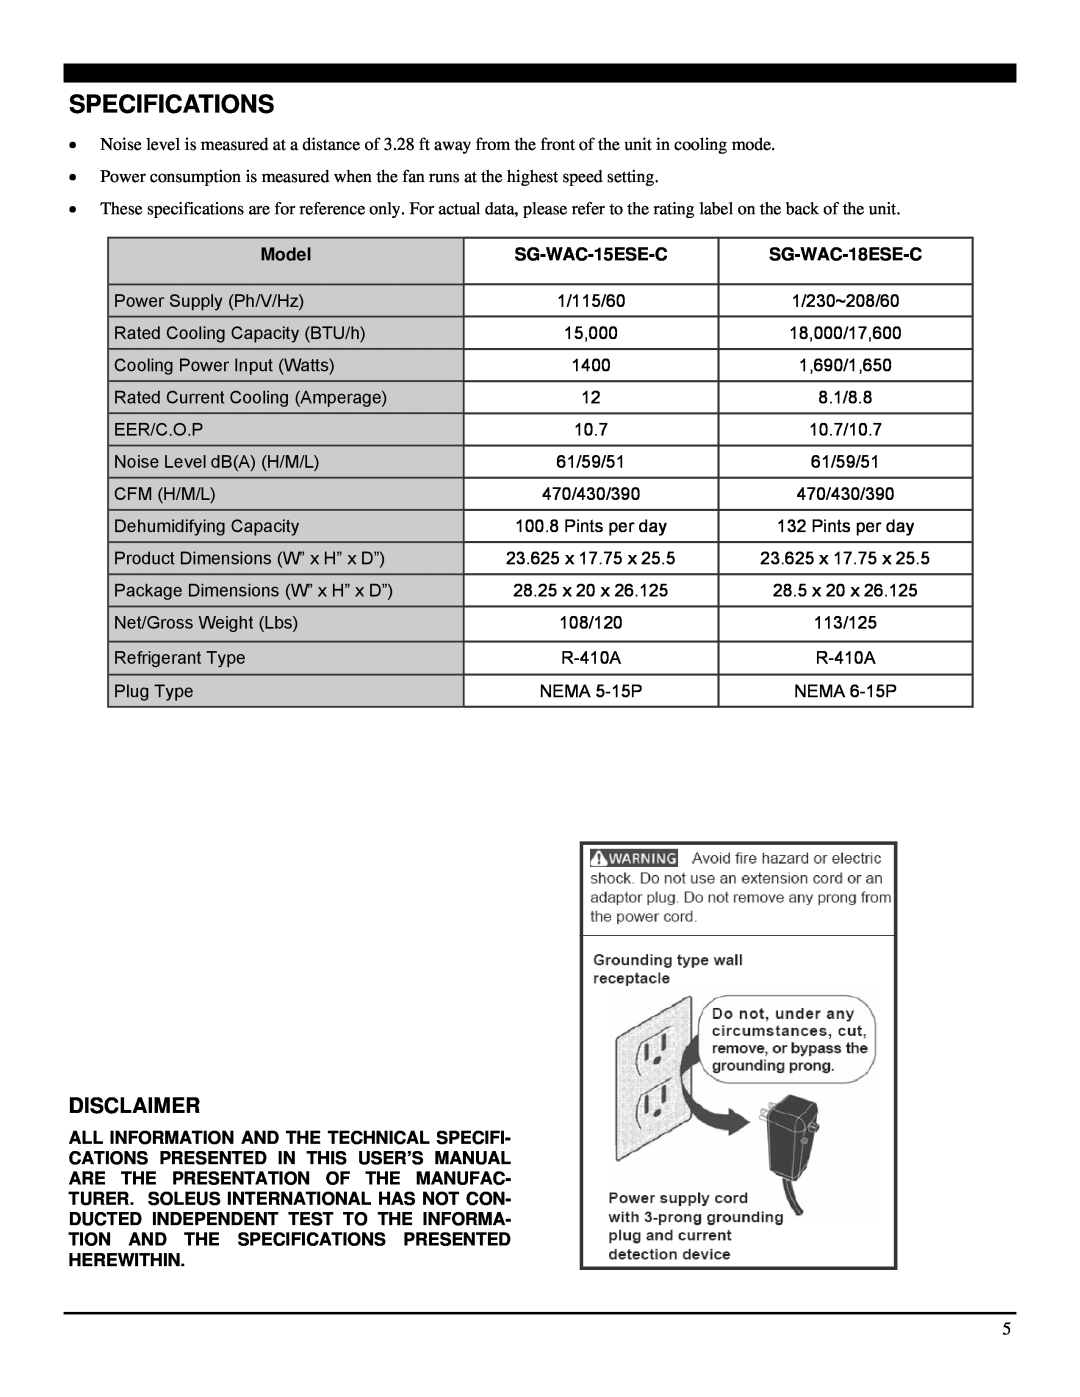 Soleus Air SG-WAC 15ESE-C manual Specifications, Disclaimer, Model, SG-WAC-15ESE-C, SG-WAC-18ESE-C 